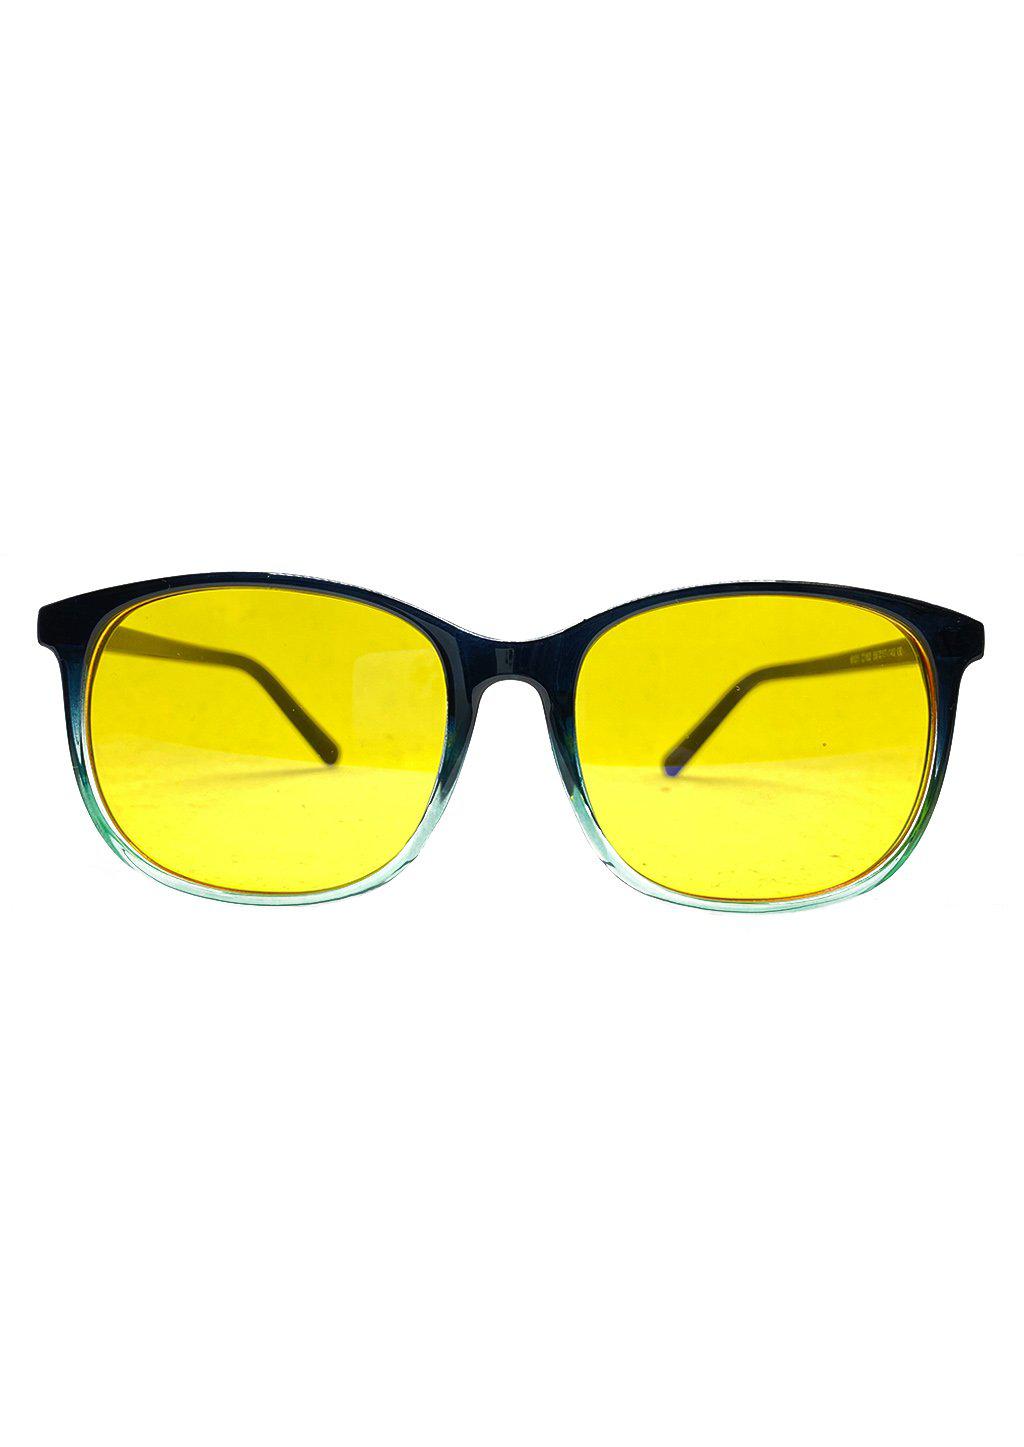 Blaulichtblockierung - Nexus - Blue-light glasses / Gaming glasses - Neo-3